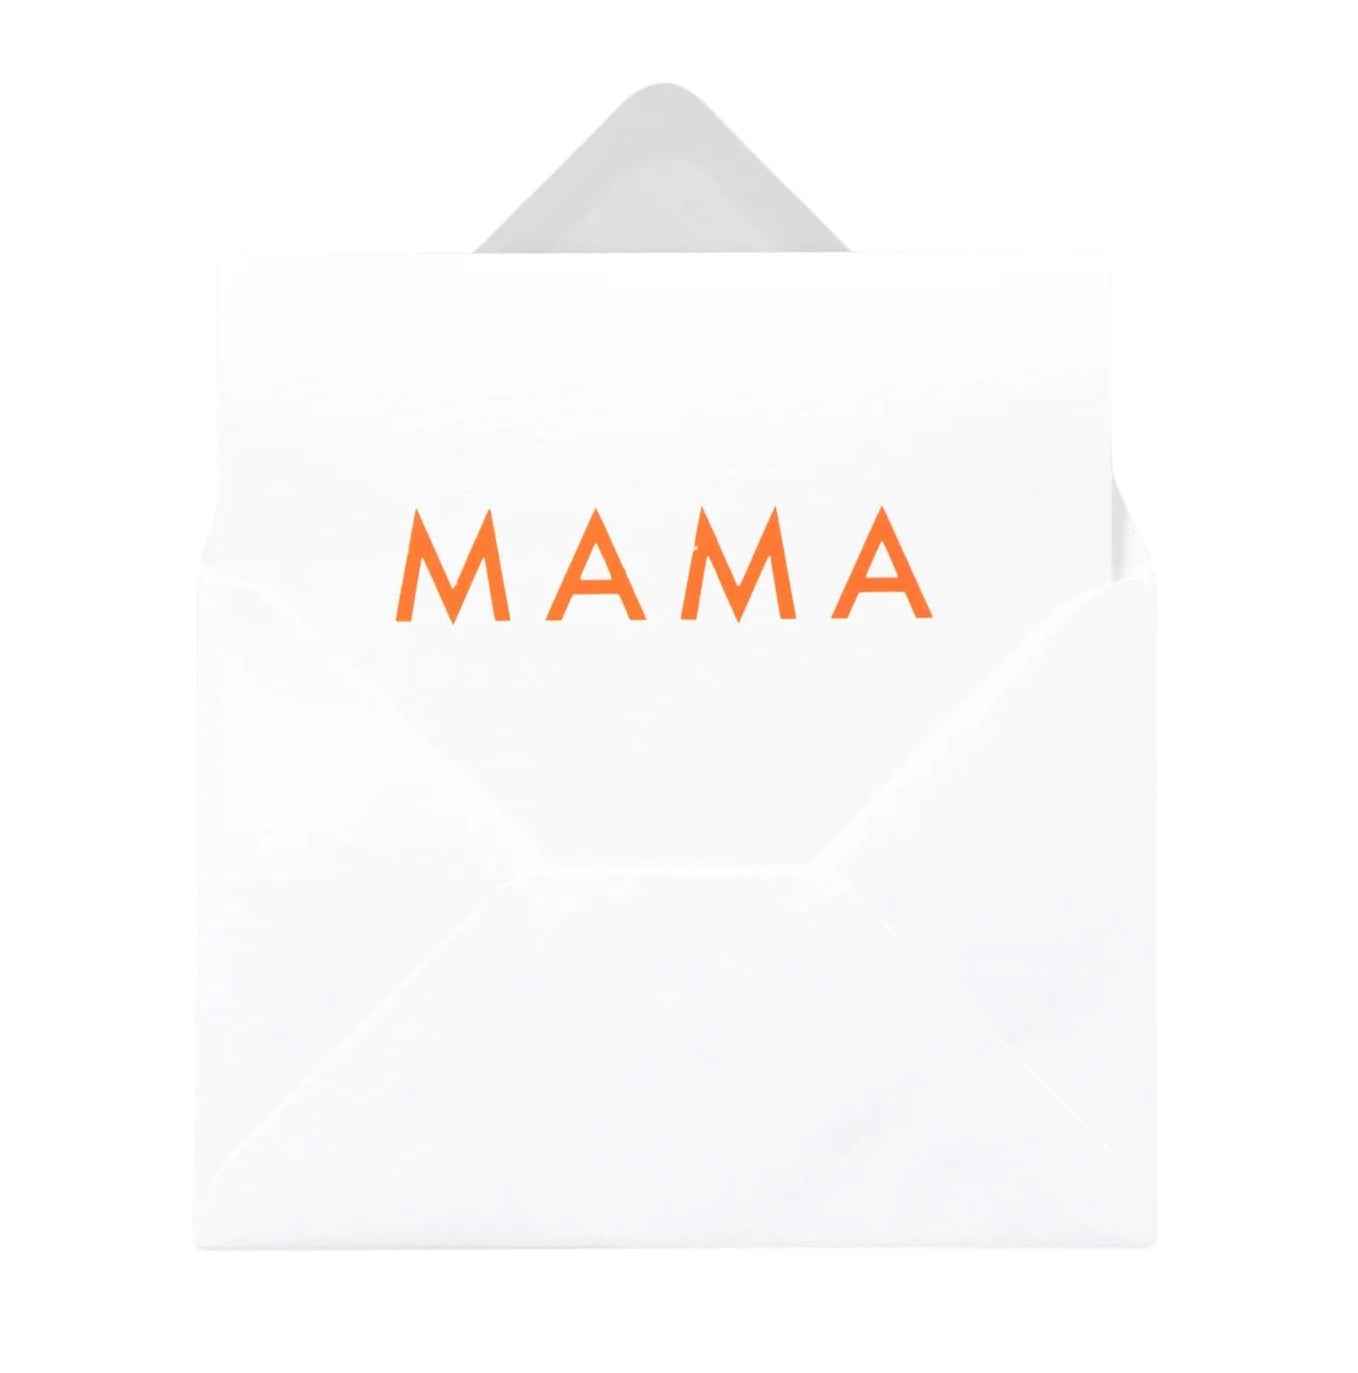 Mama Card | by Ola - Lifestory